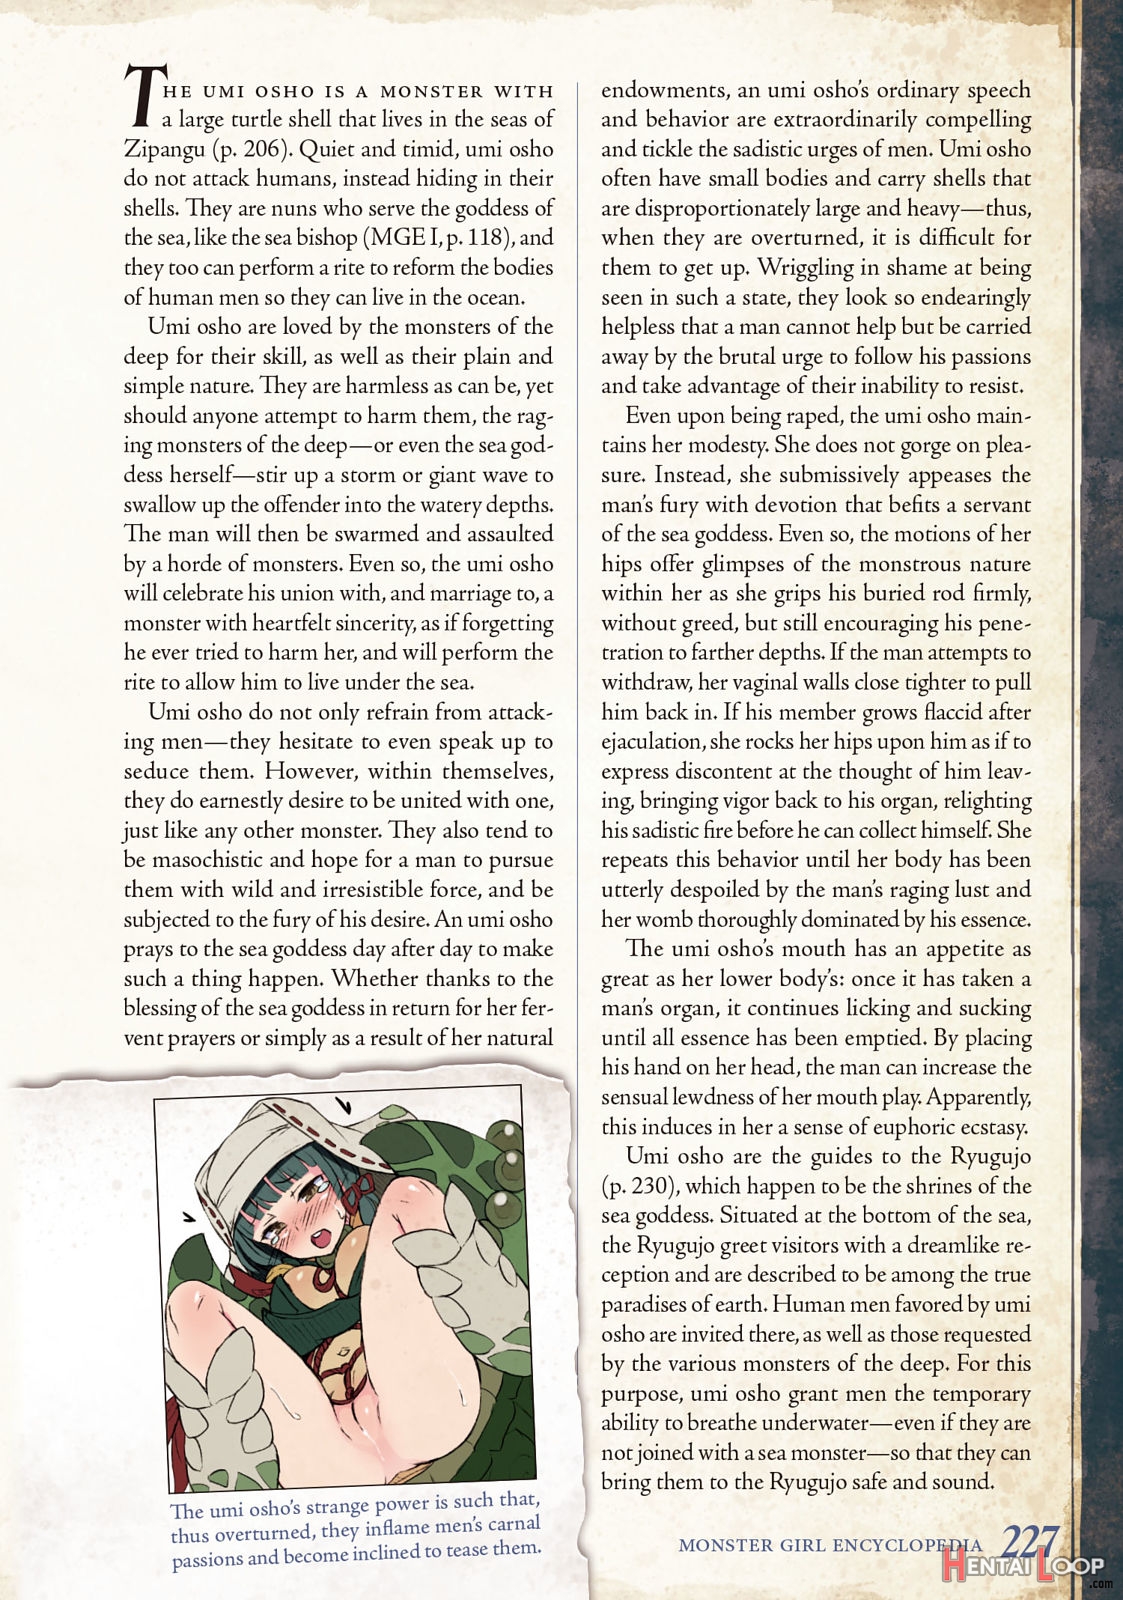 Monster Girl Encyclopedia Vol. 2 page 228